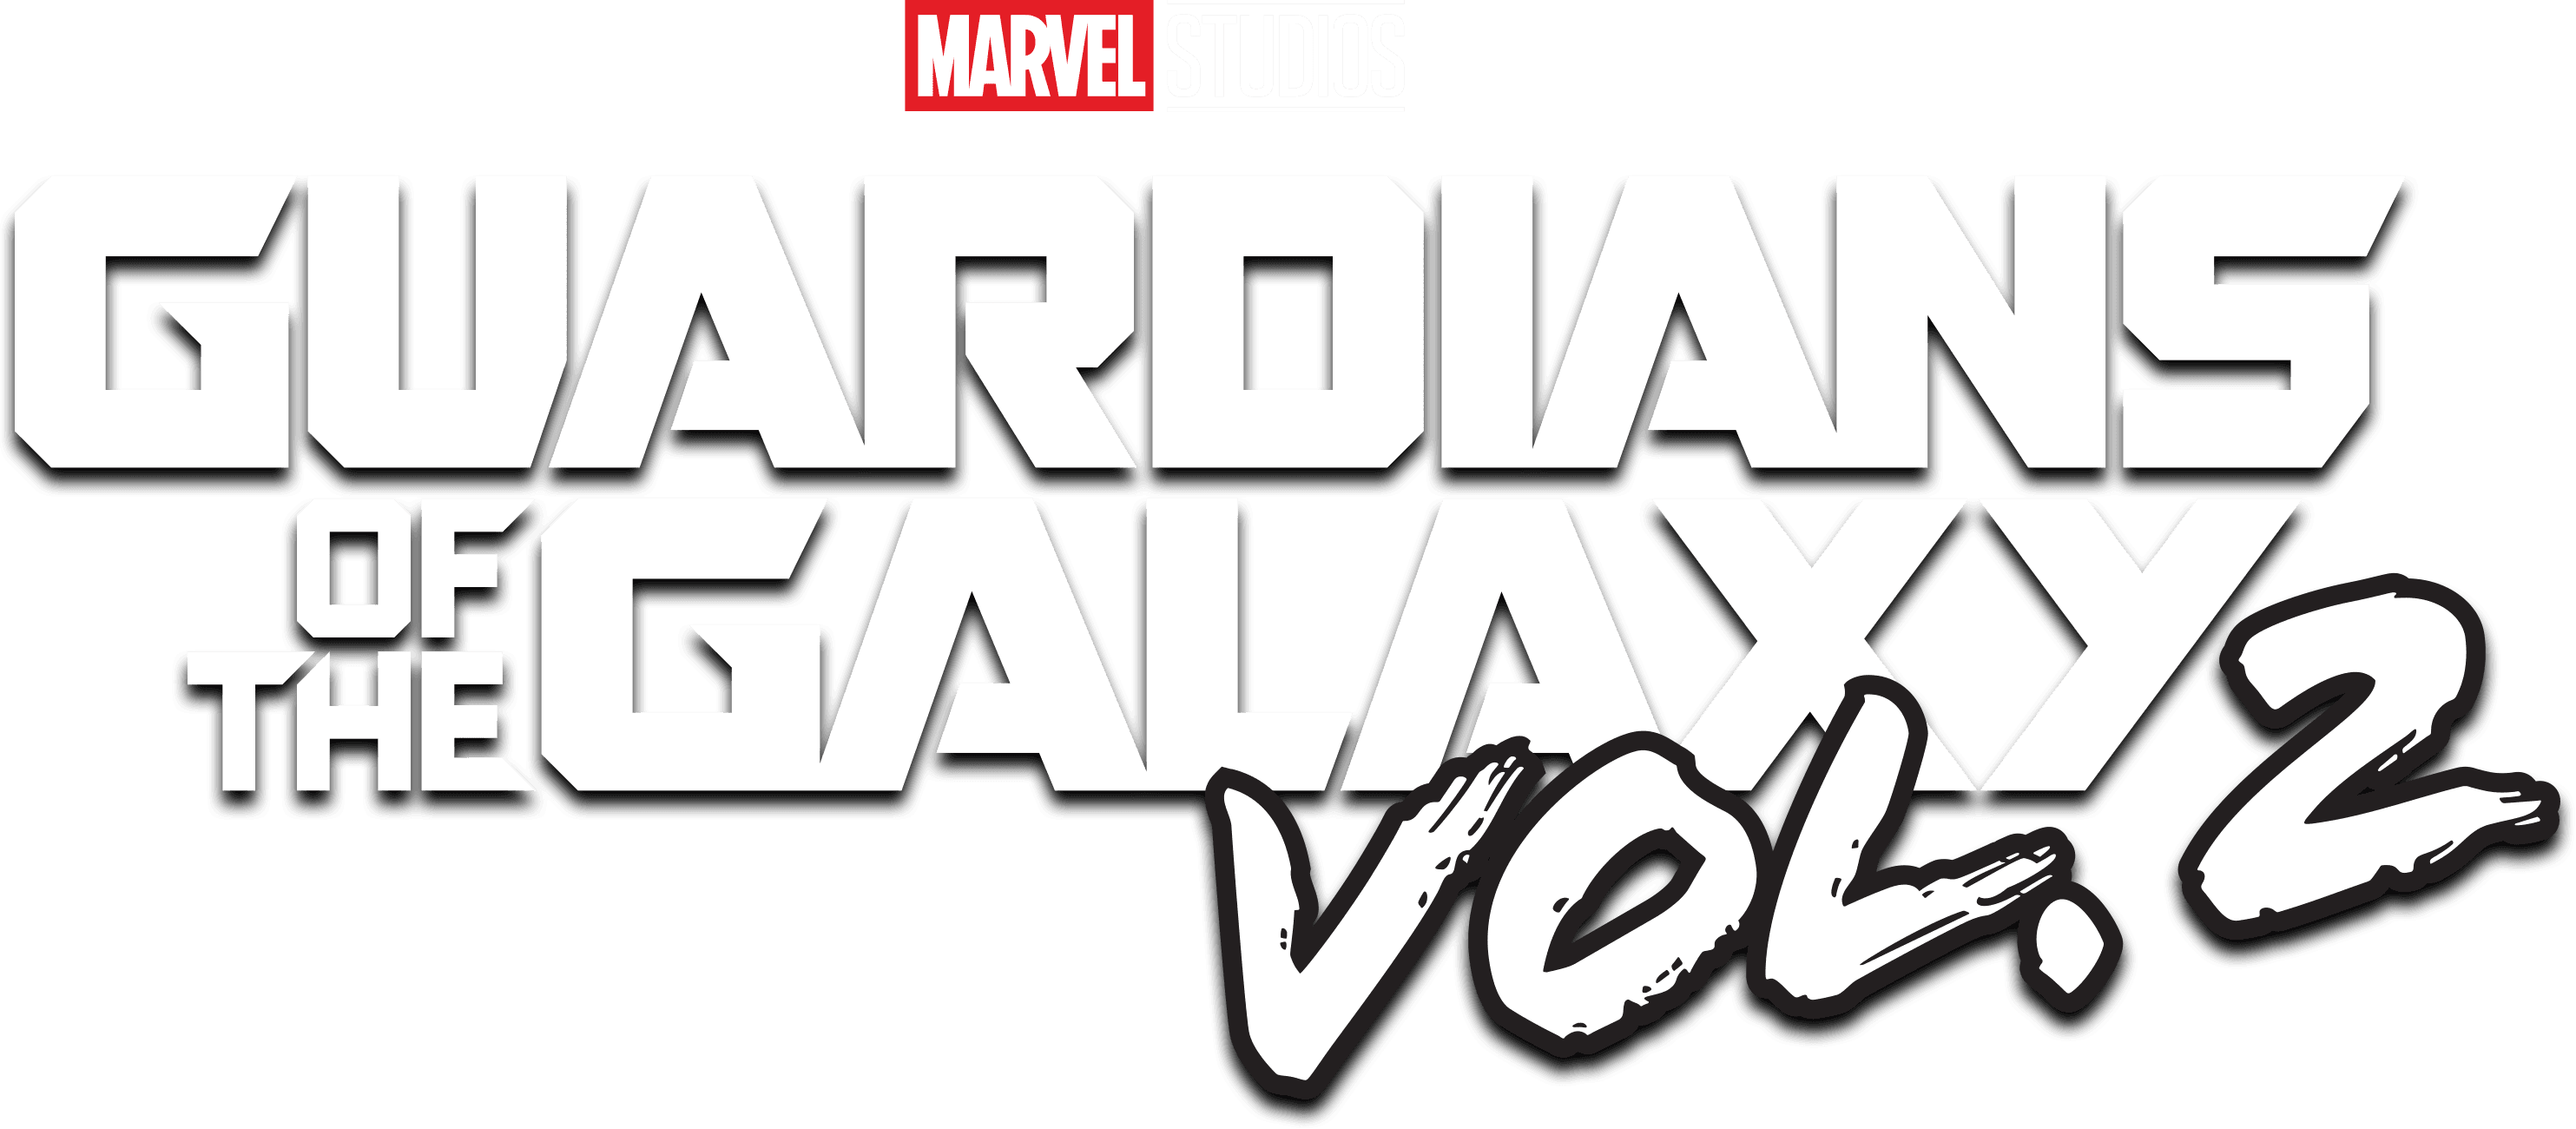 Guardians of the Galaxy Vol. 2 logo